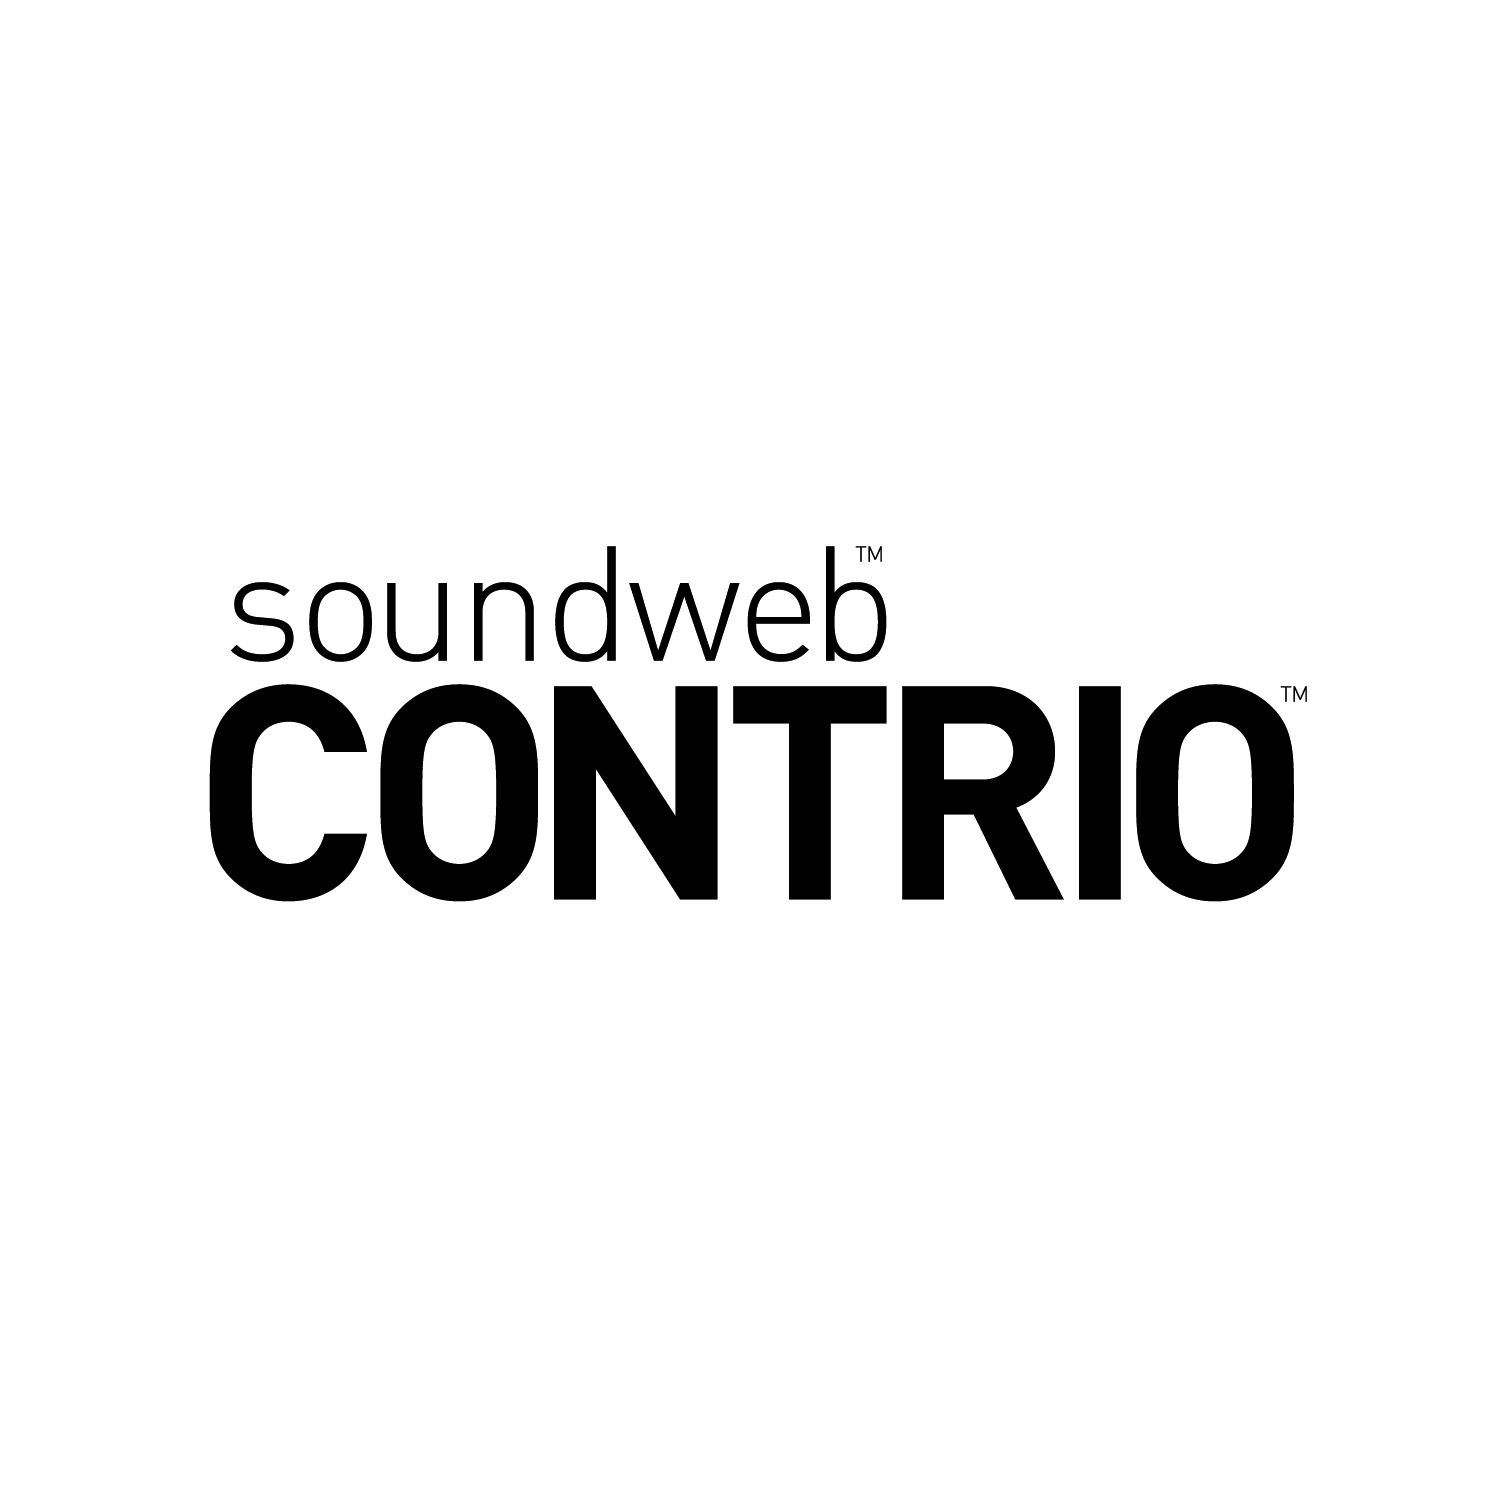 BSS Audio 推出Soundweb™ Contrio™ 平台，旨在为网络音频应用提供革命性的系统控制功能